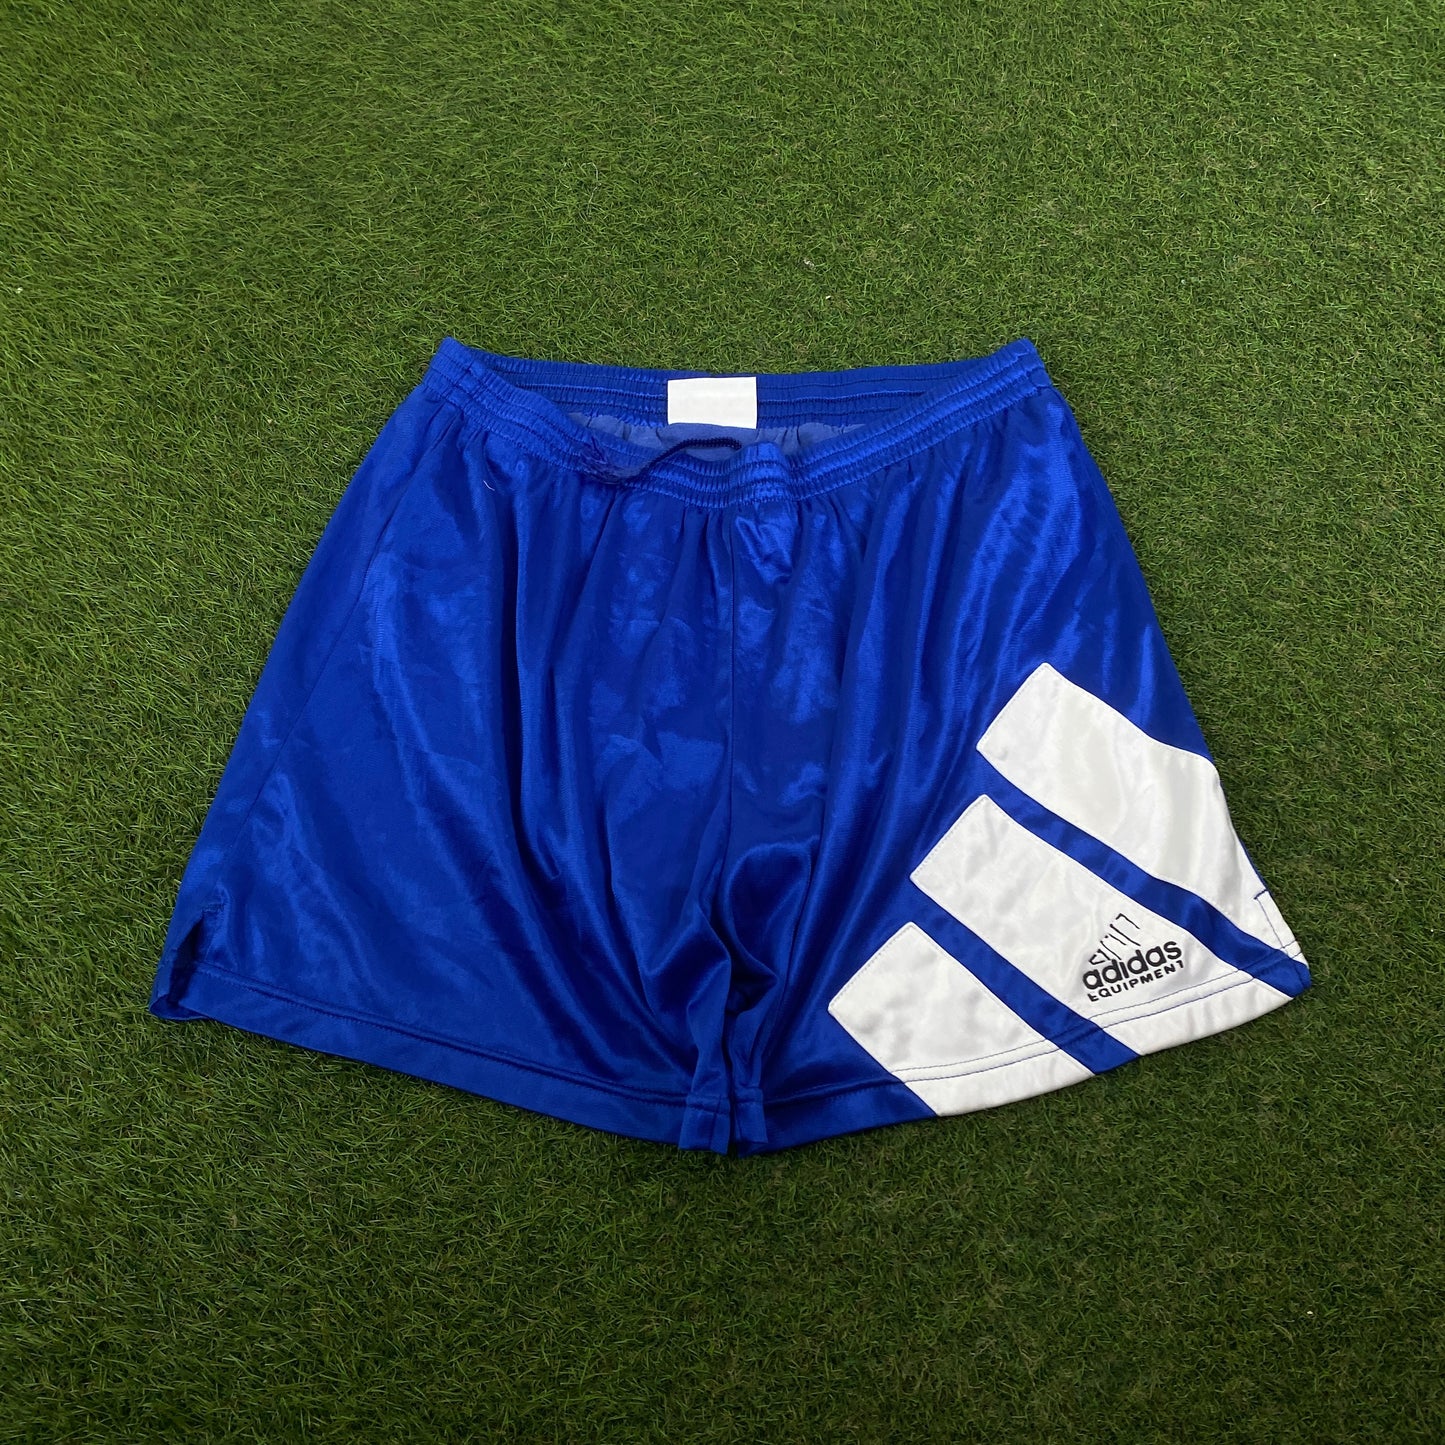 90s Adidas Equipment Football Shorts Blue Large